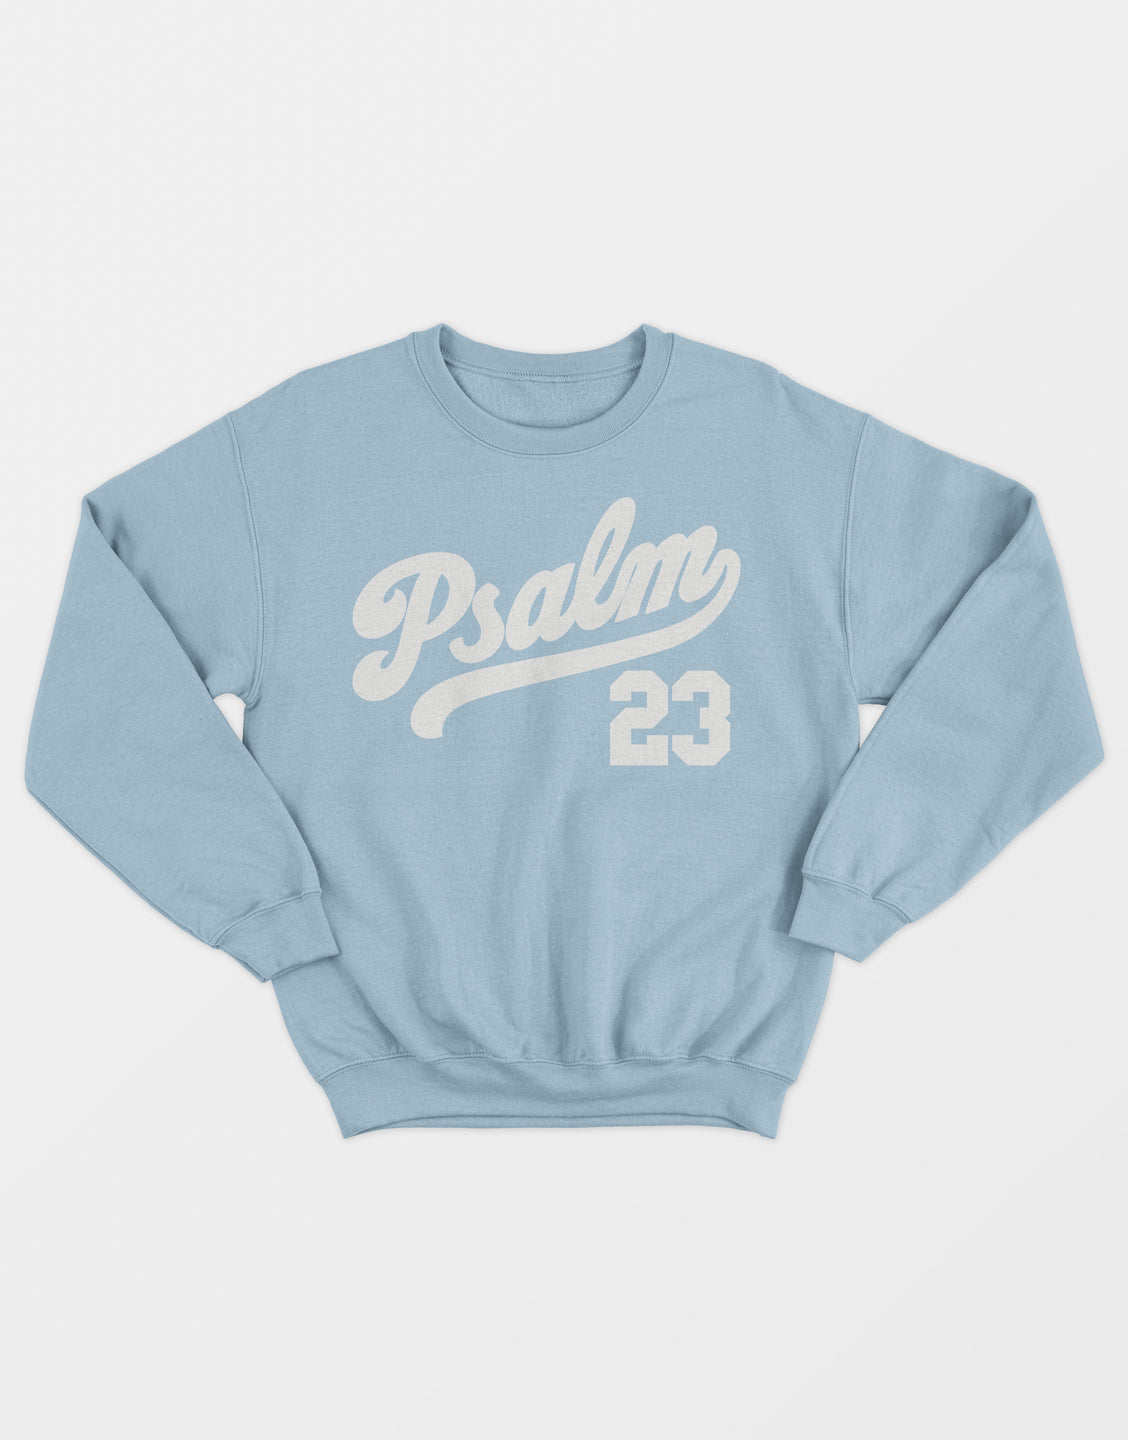 Psalm 23 Sweatshirt - Stone Blue